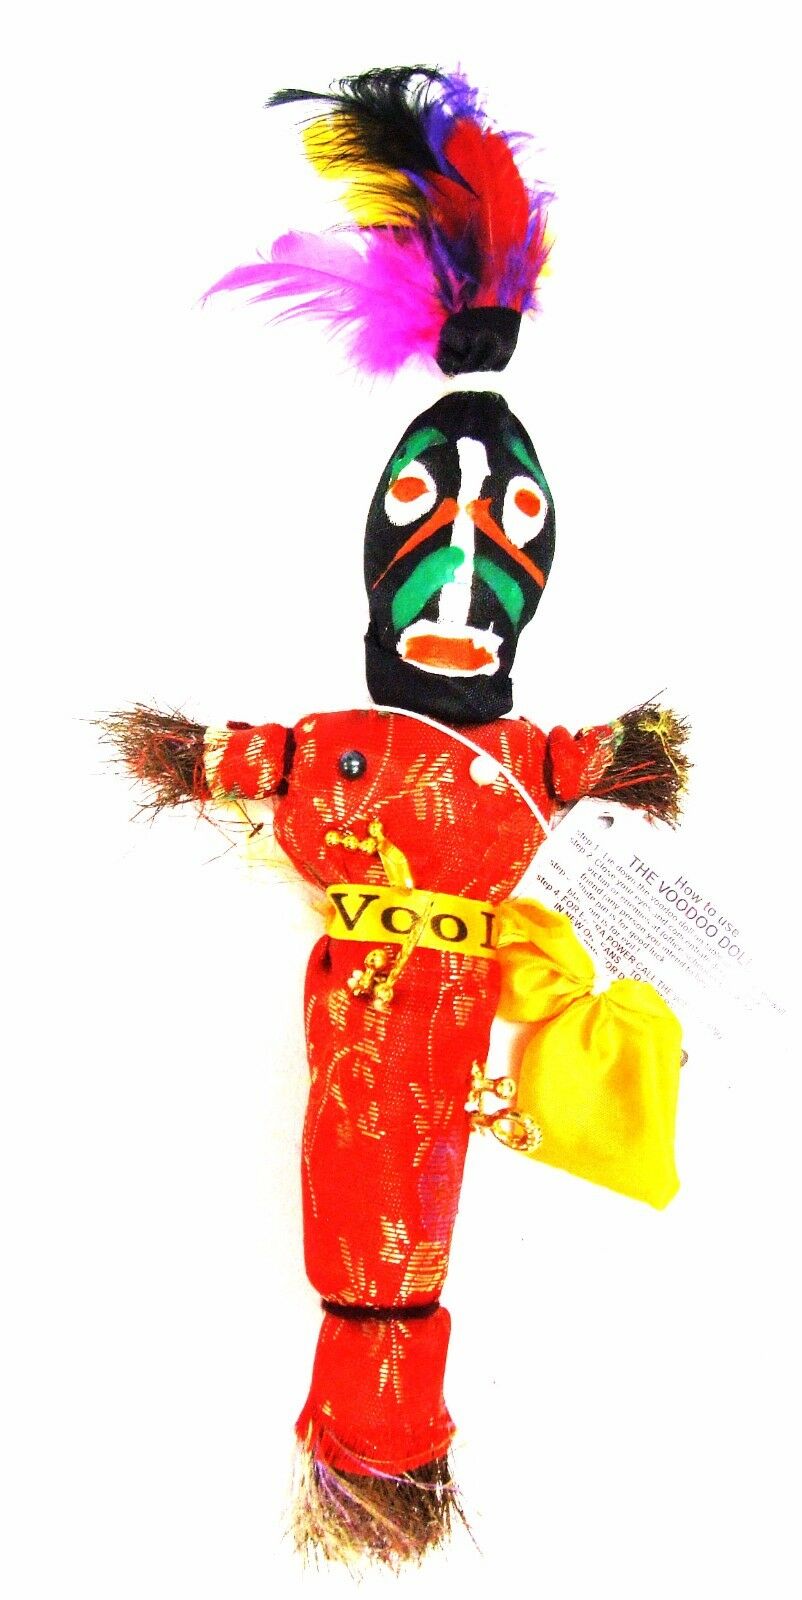 Voodoo Doll Power Revenge Hurt Force Curse K-4 New Orleans Bayou Spell